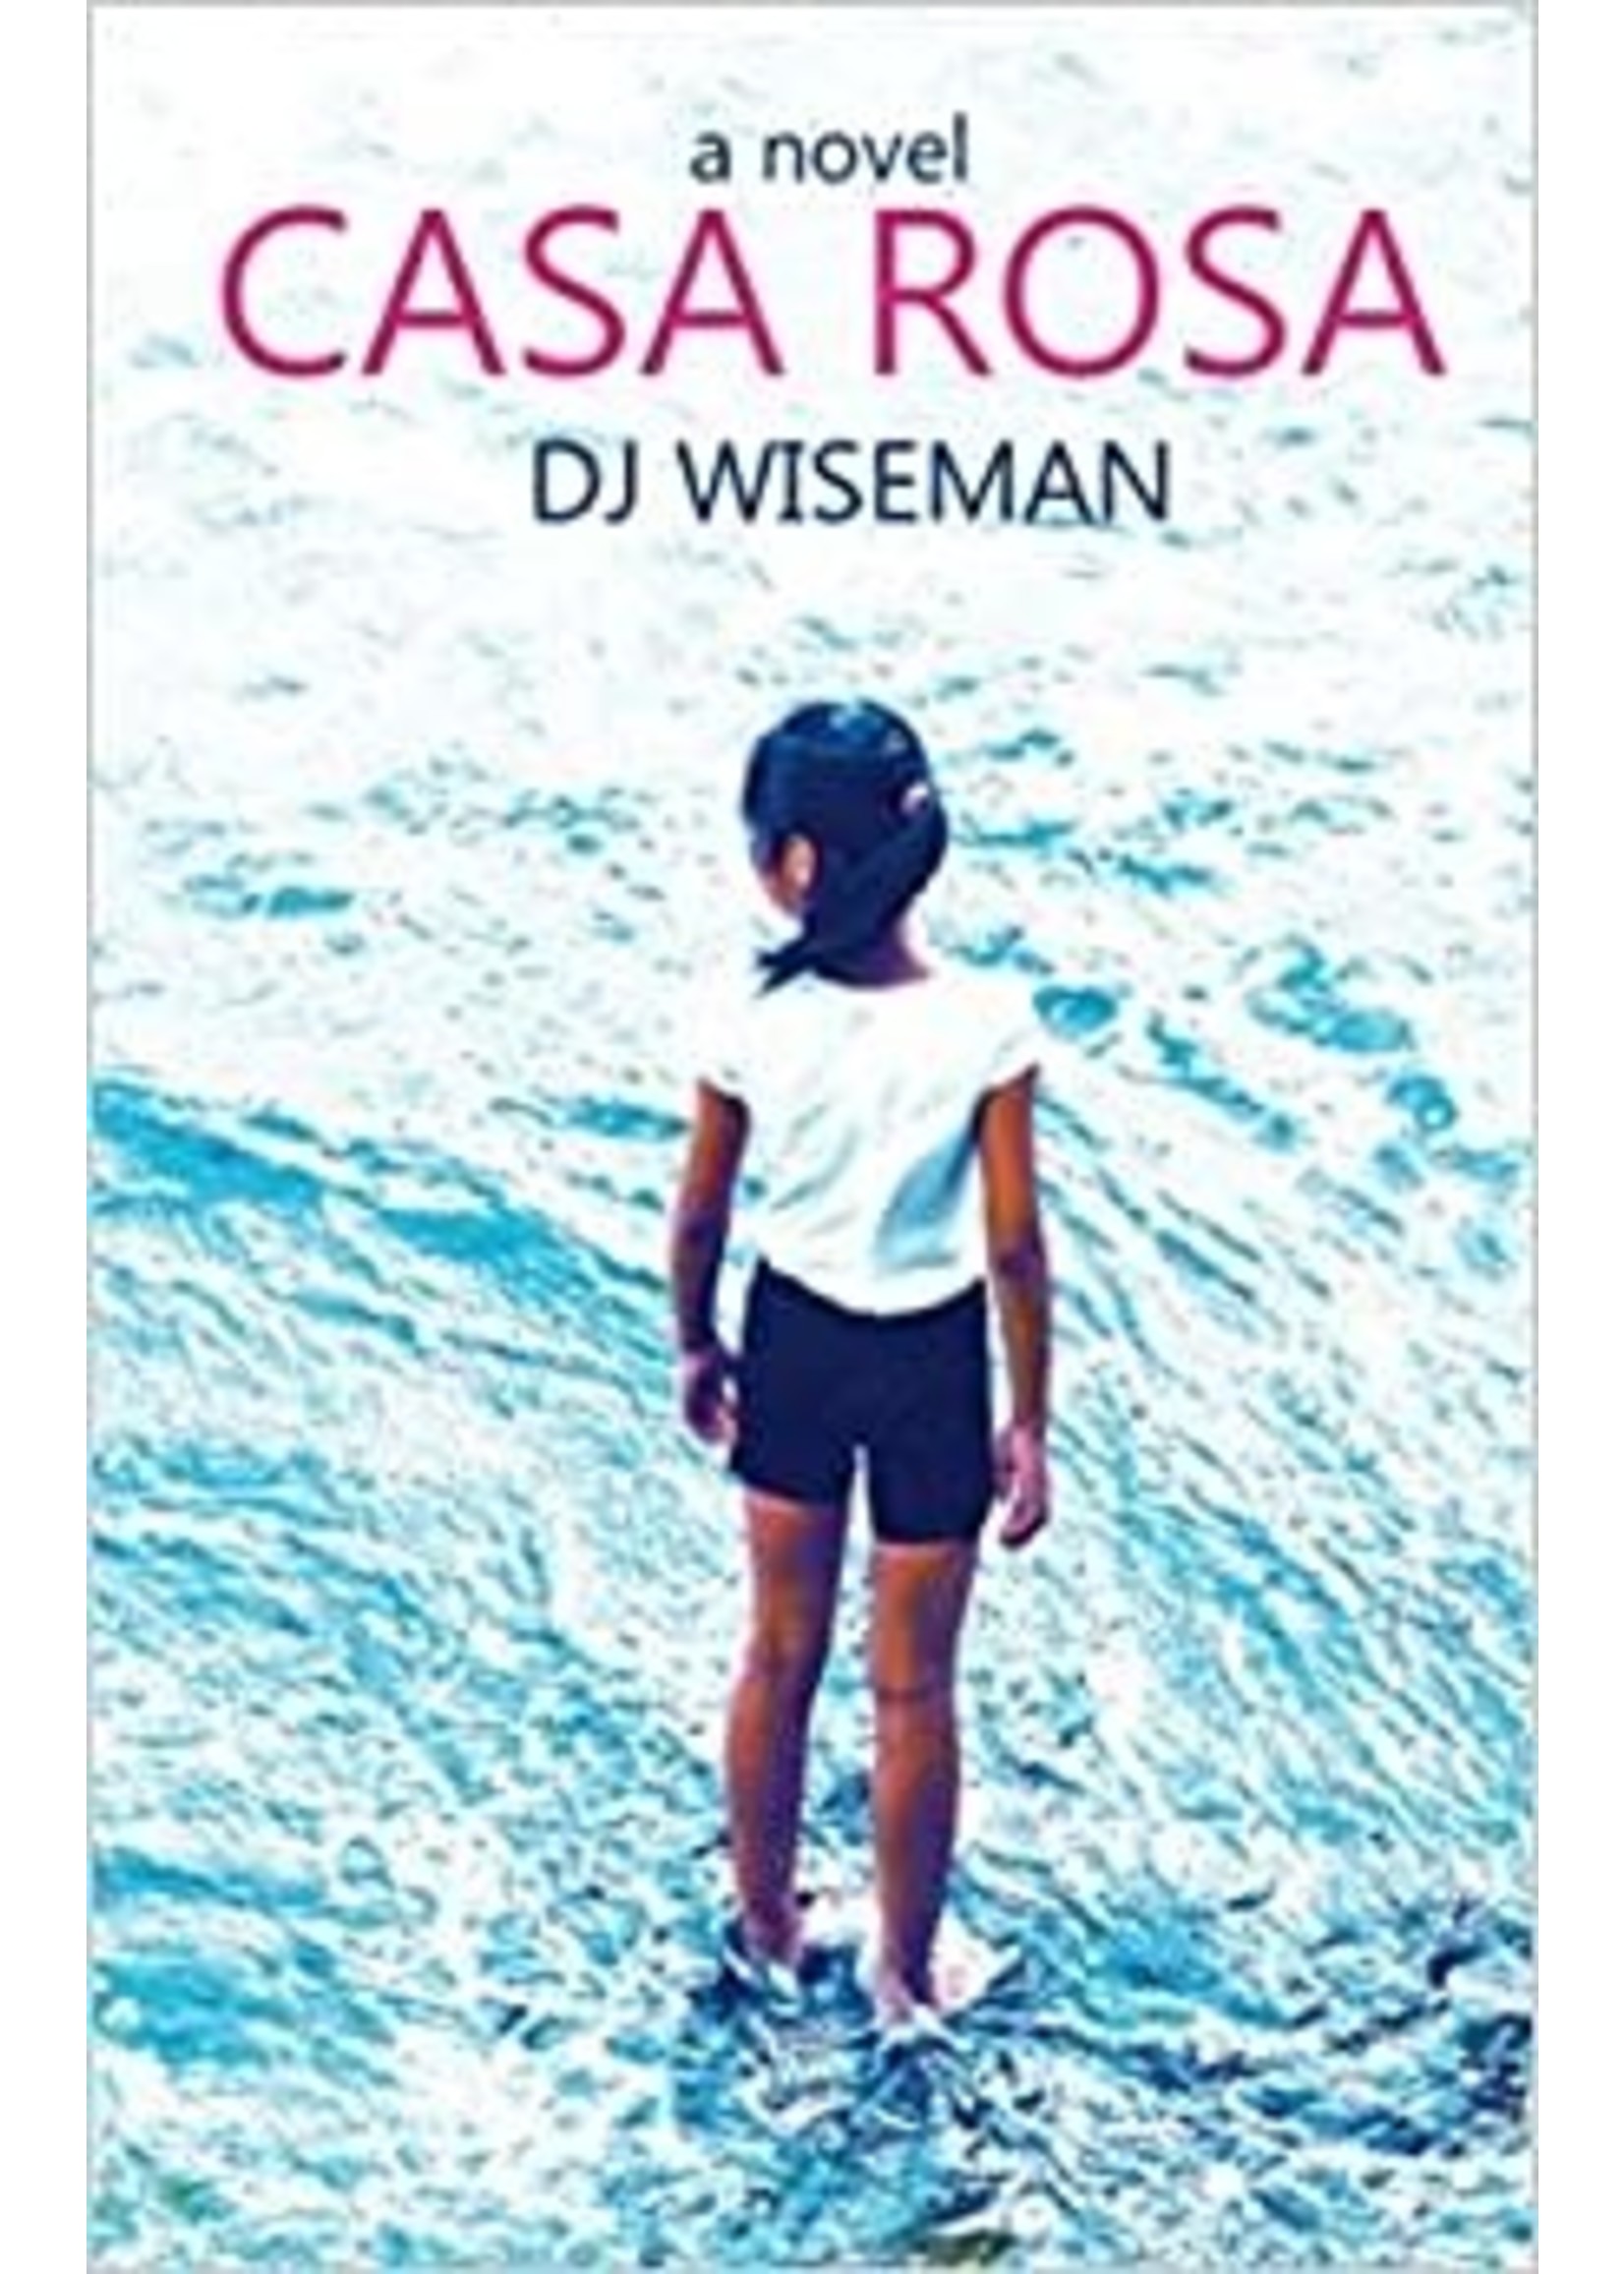 Casa Rosa by DJ Wiseman